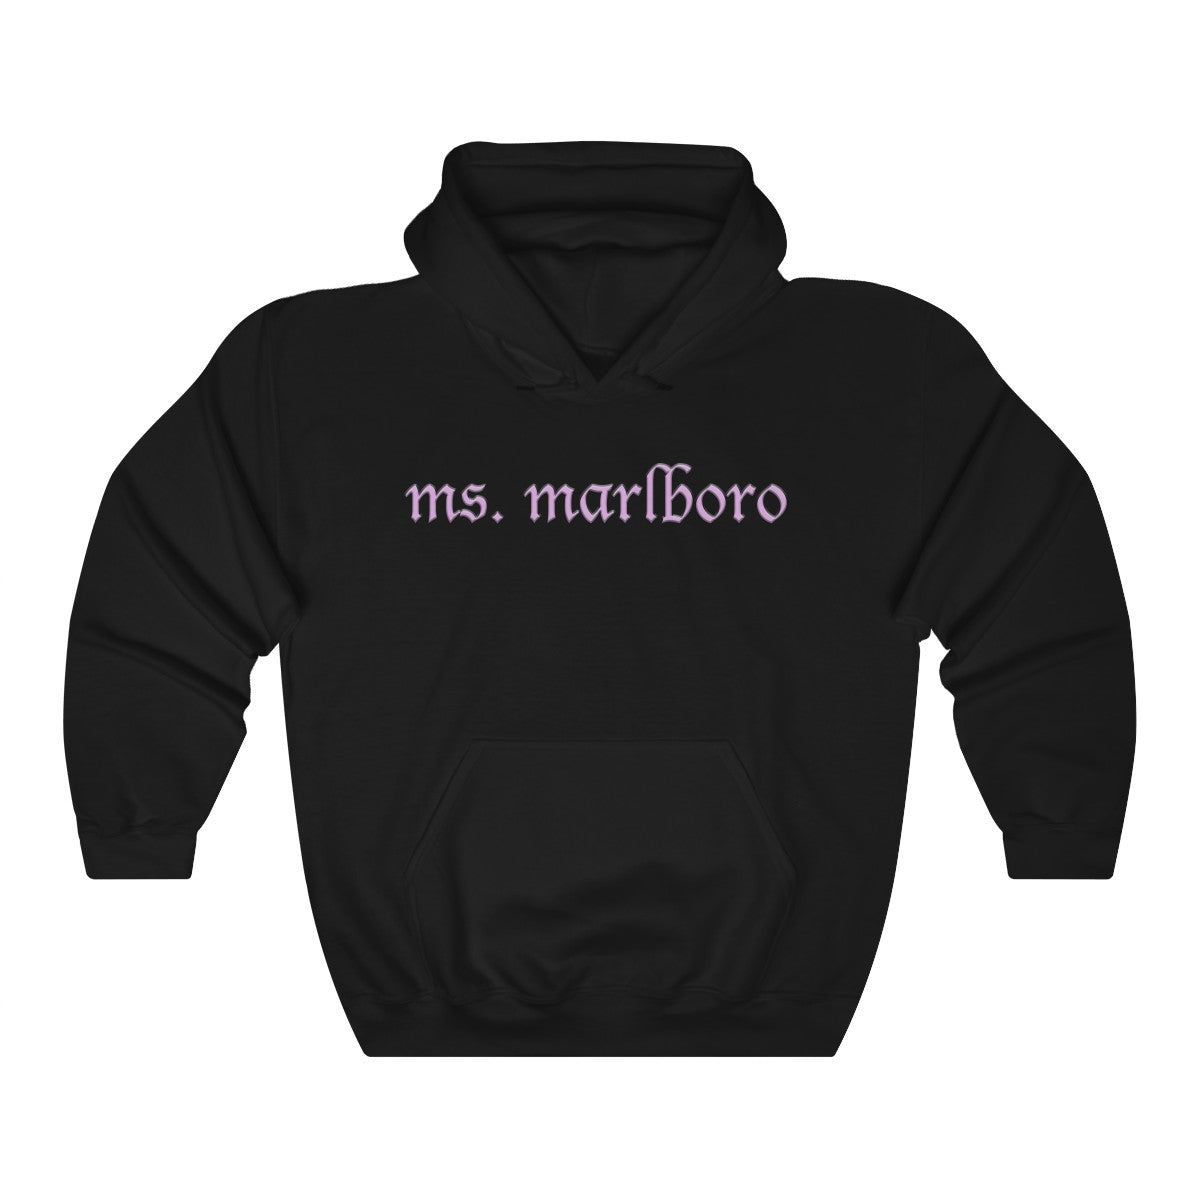 marlboro hoodie black